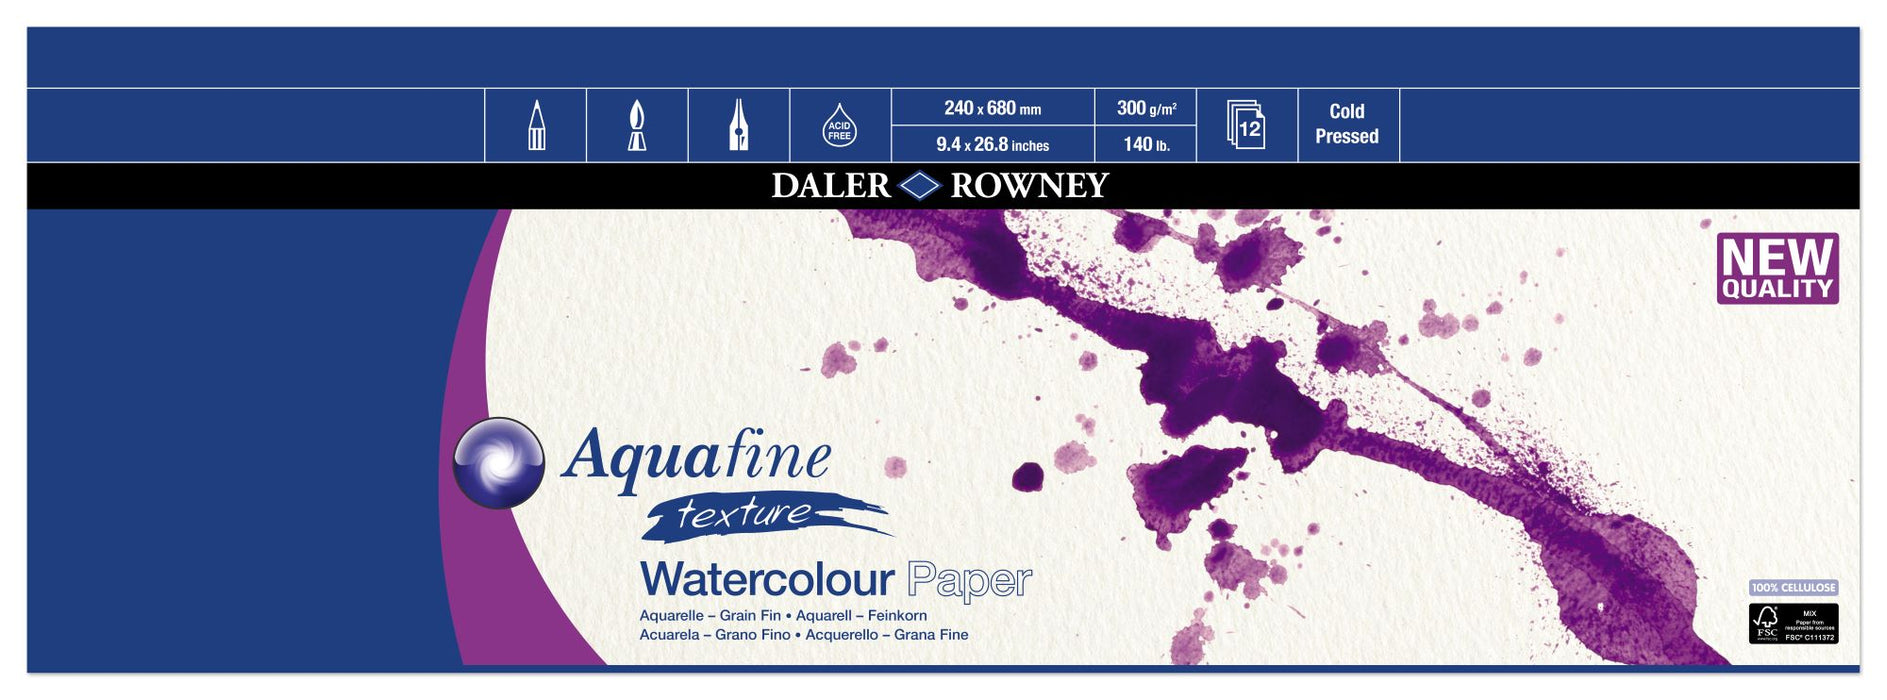 Daler Rowney Aquafine Watercolour Pad 680mmx240mm